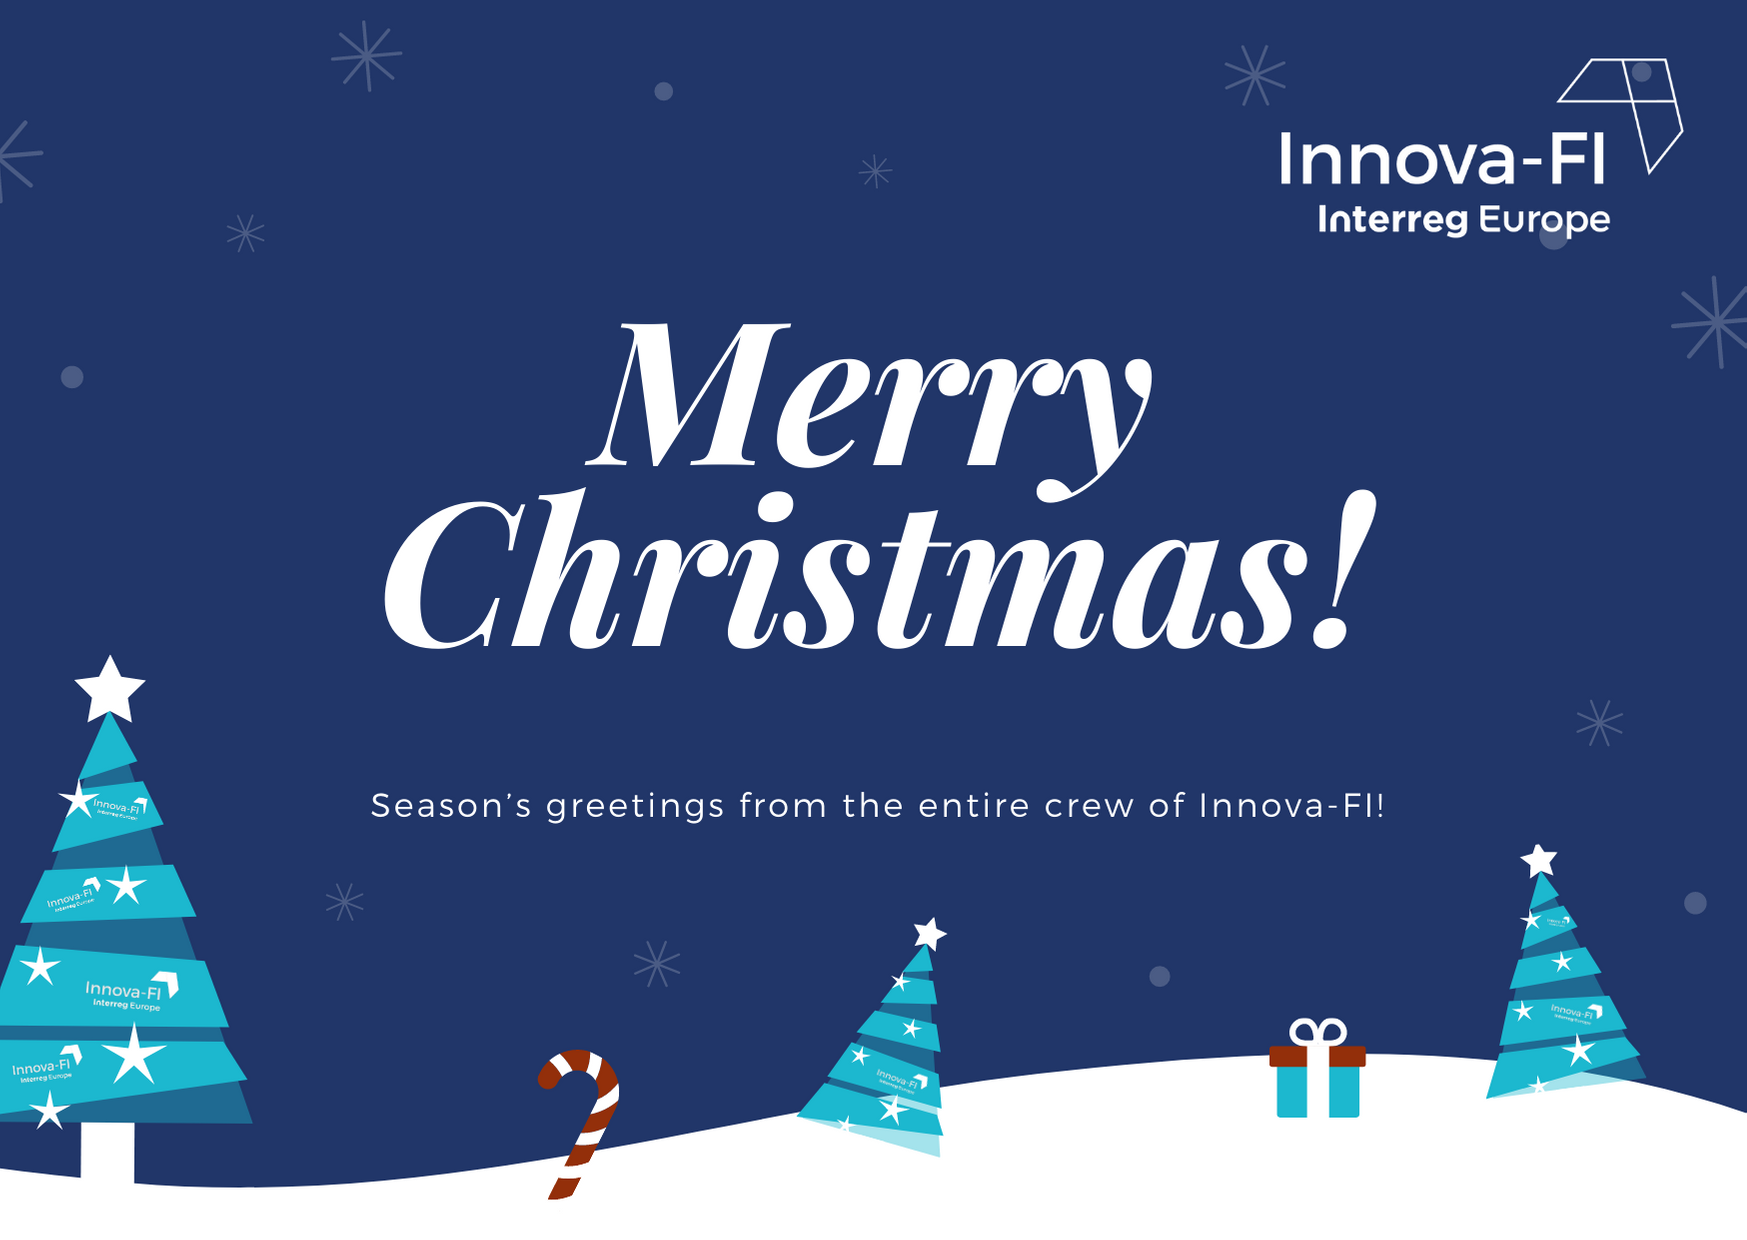 Merry Christmas from Innova-FI